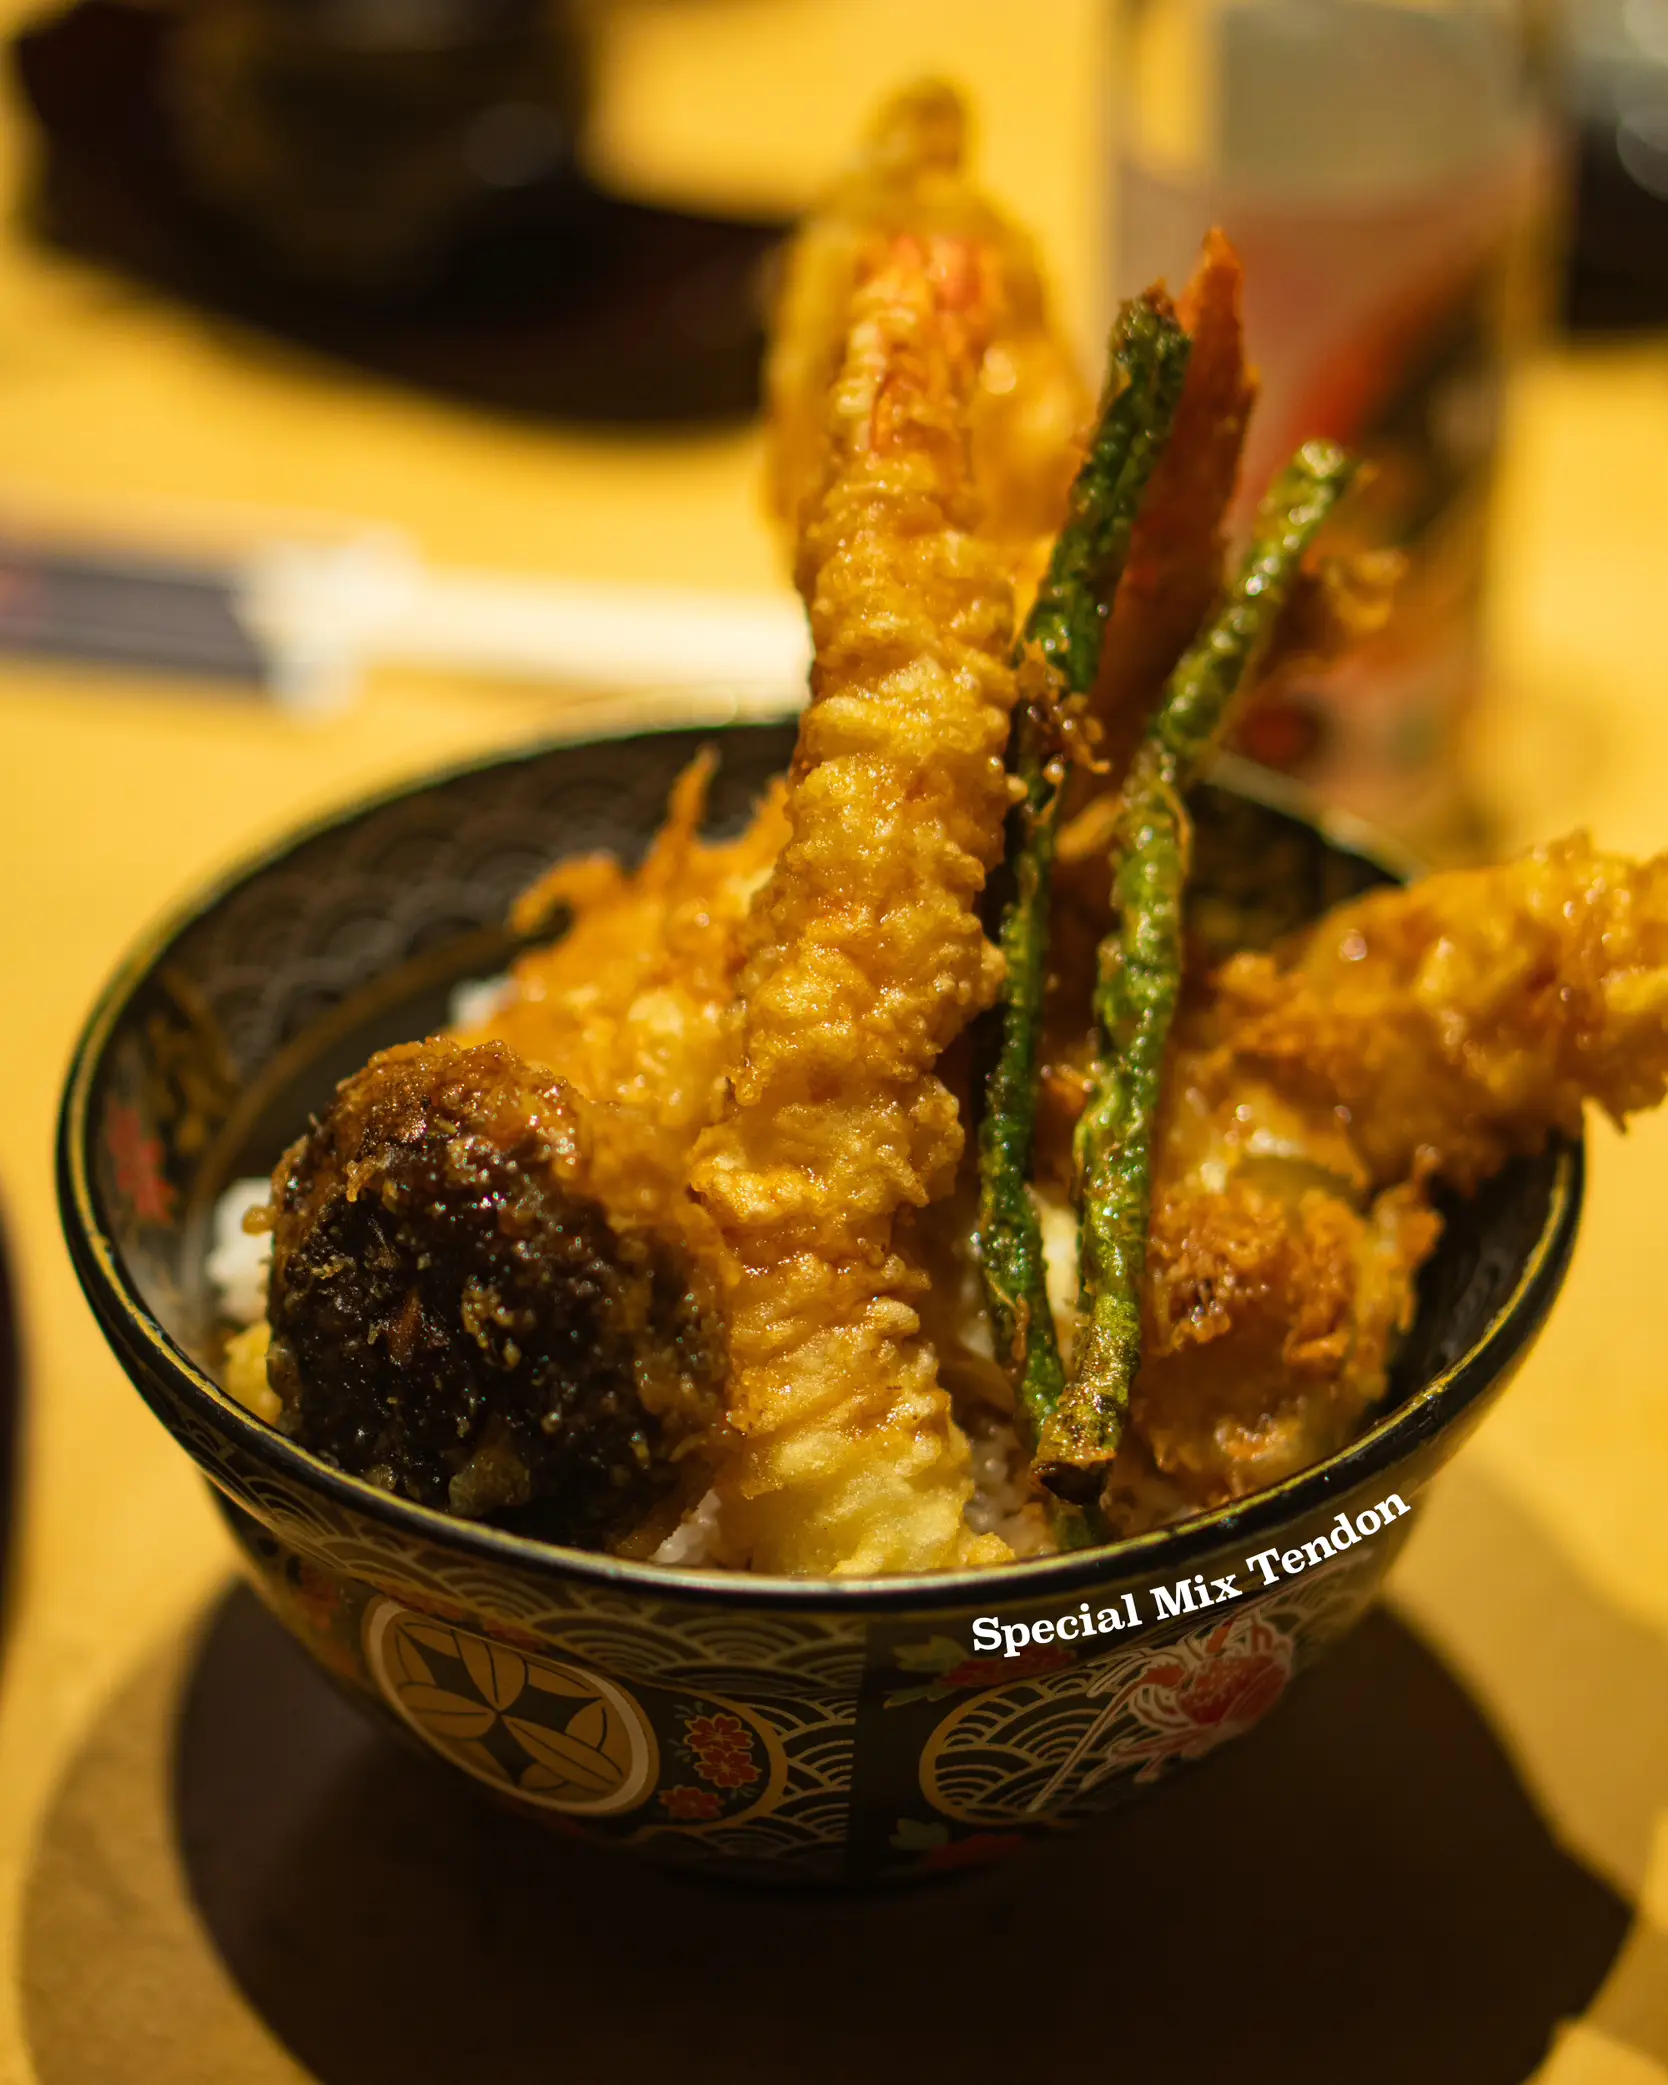 Popular Dishes at Ginza Tendon Itsuki - Lemon8 Search